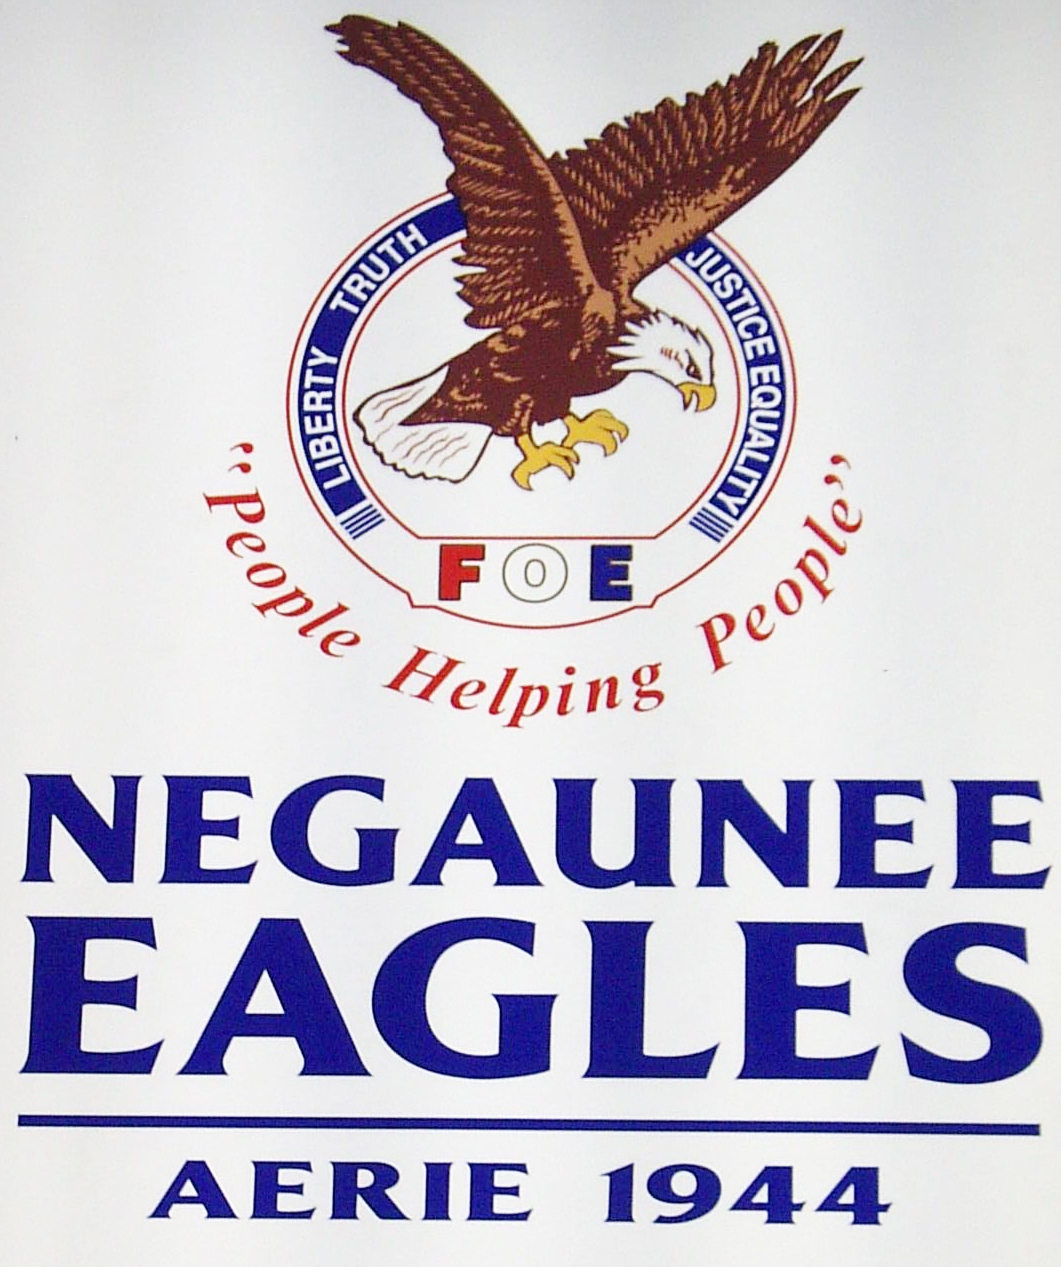 The Negaunee Eagles #1944